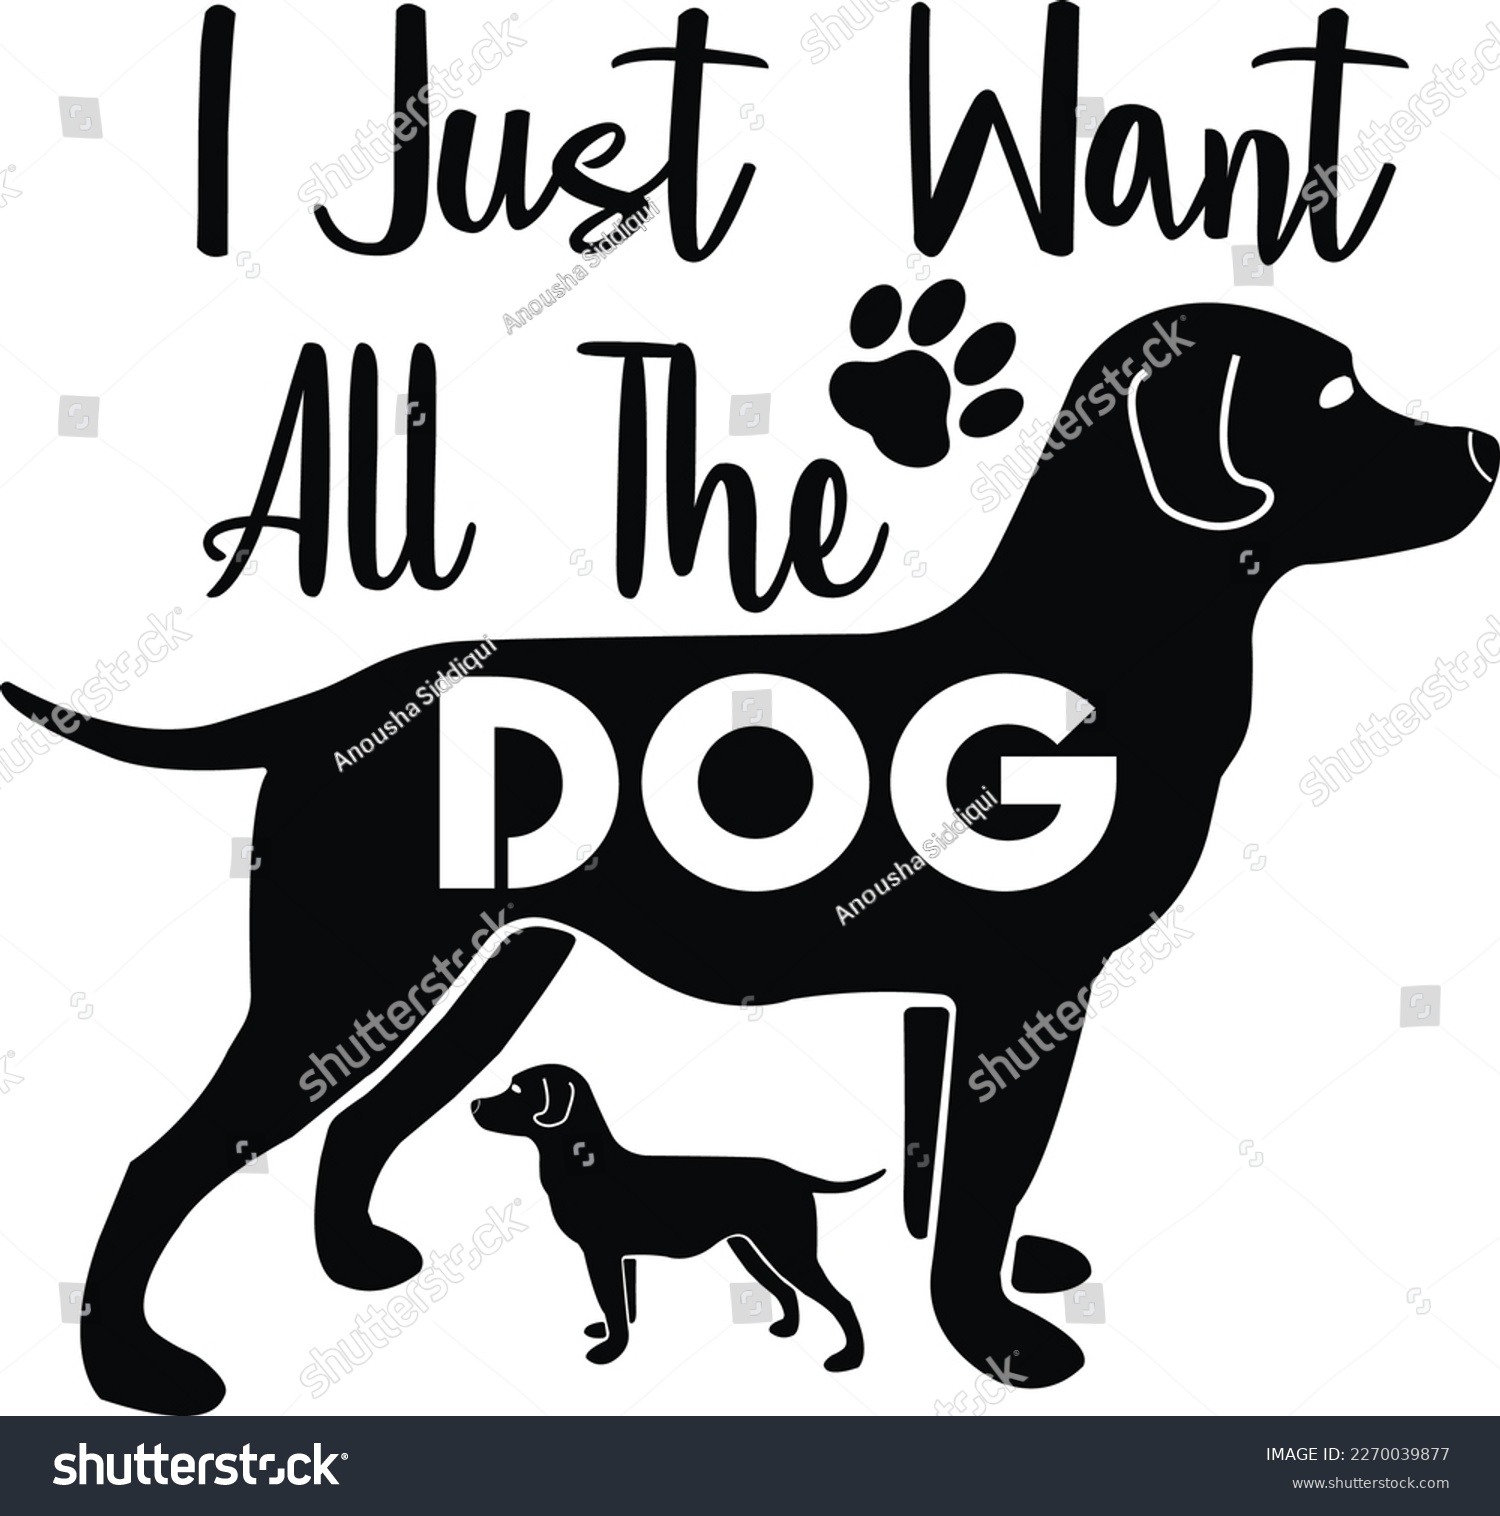 SVG of Dog SVG bundle, Funny Dog Quotes SVG Designs Bundle. Cute Dog quotes SVG cut files bundle, Dog quotes t-shirt designs bundle, Quotes about Puppy, Cute Puppy cut files svg